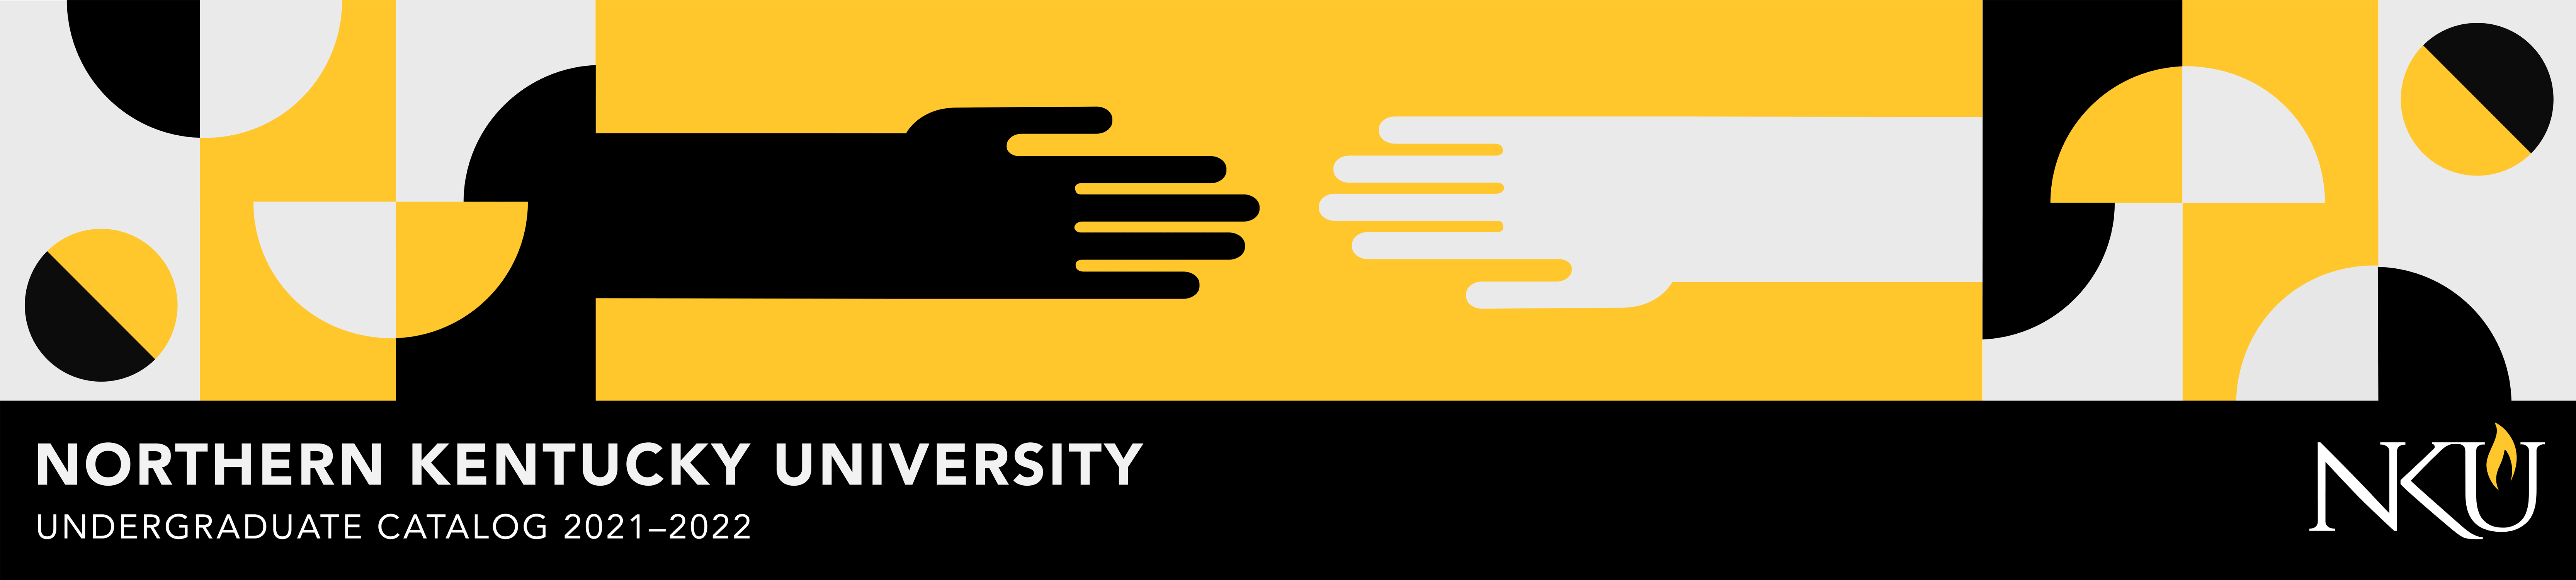 2021-2022 Undergraduate Catalog Banner Image